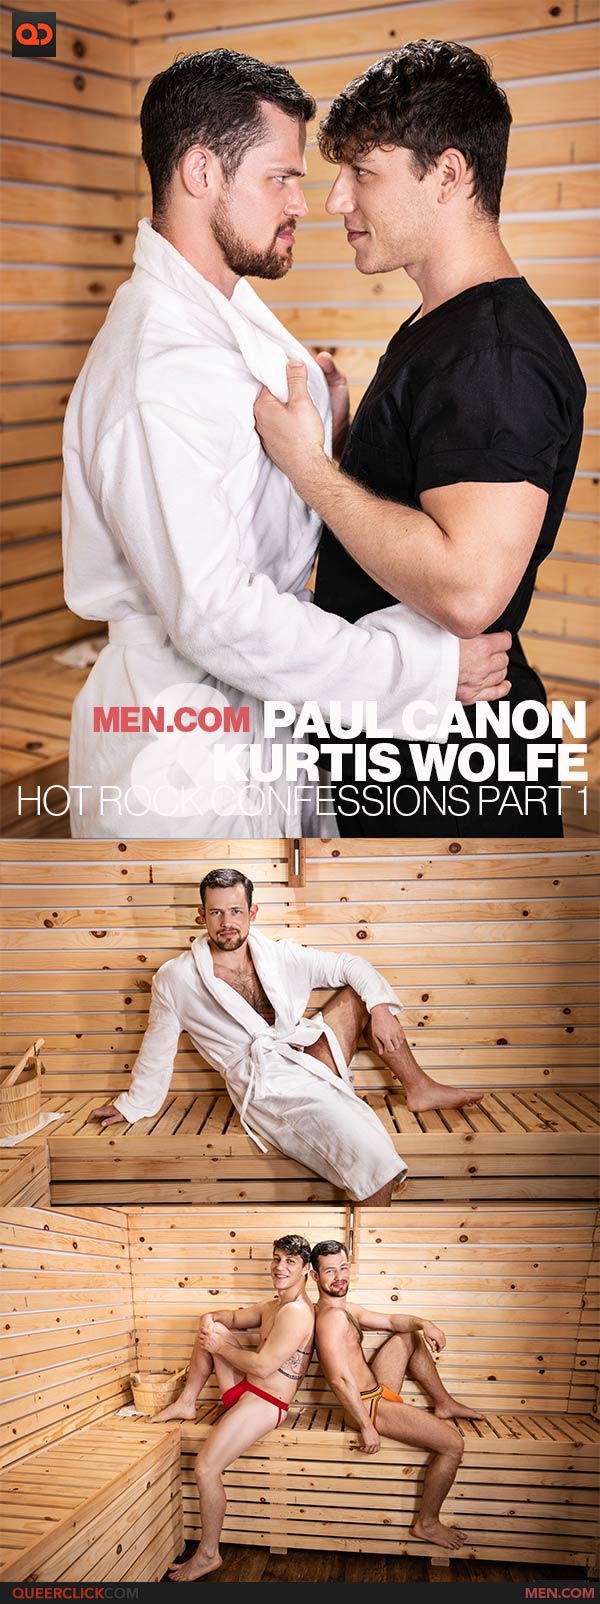 Men.com: Kurtis Wolfe and Paul Canon